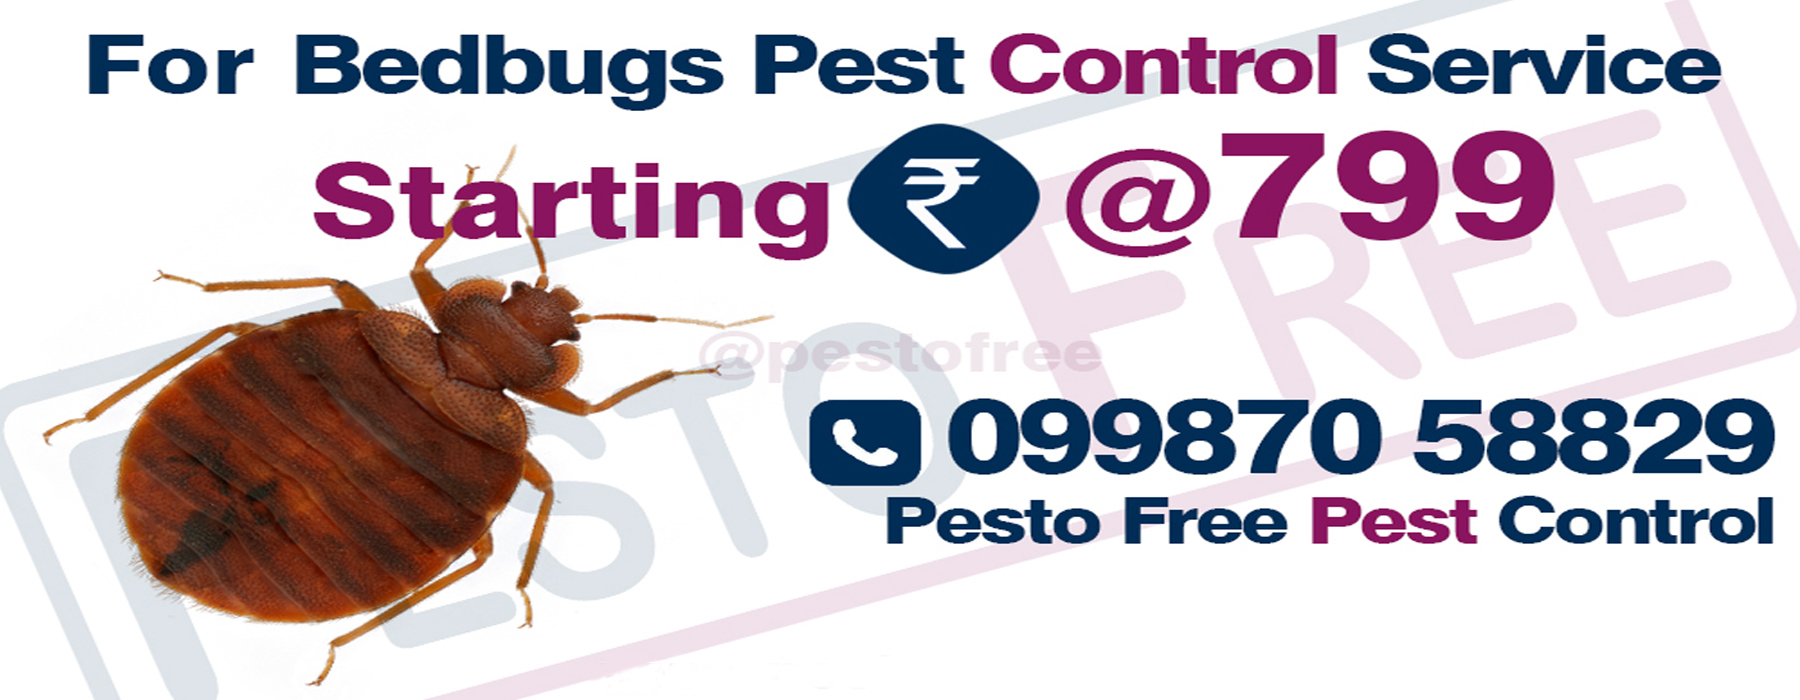 Bedbugs Pest Control in Mumbai